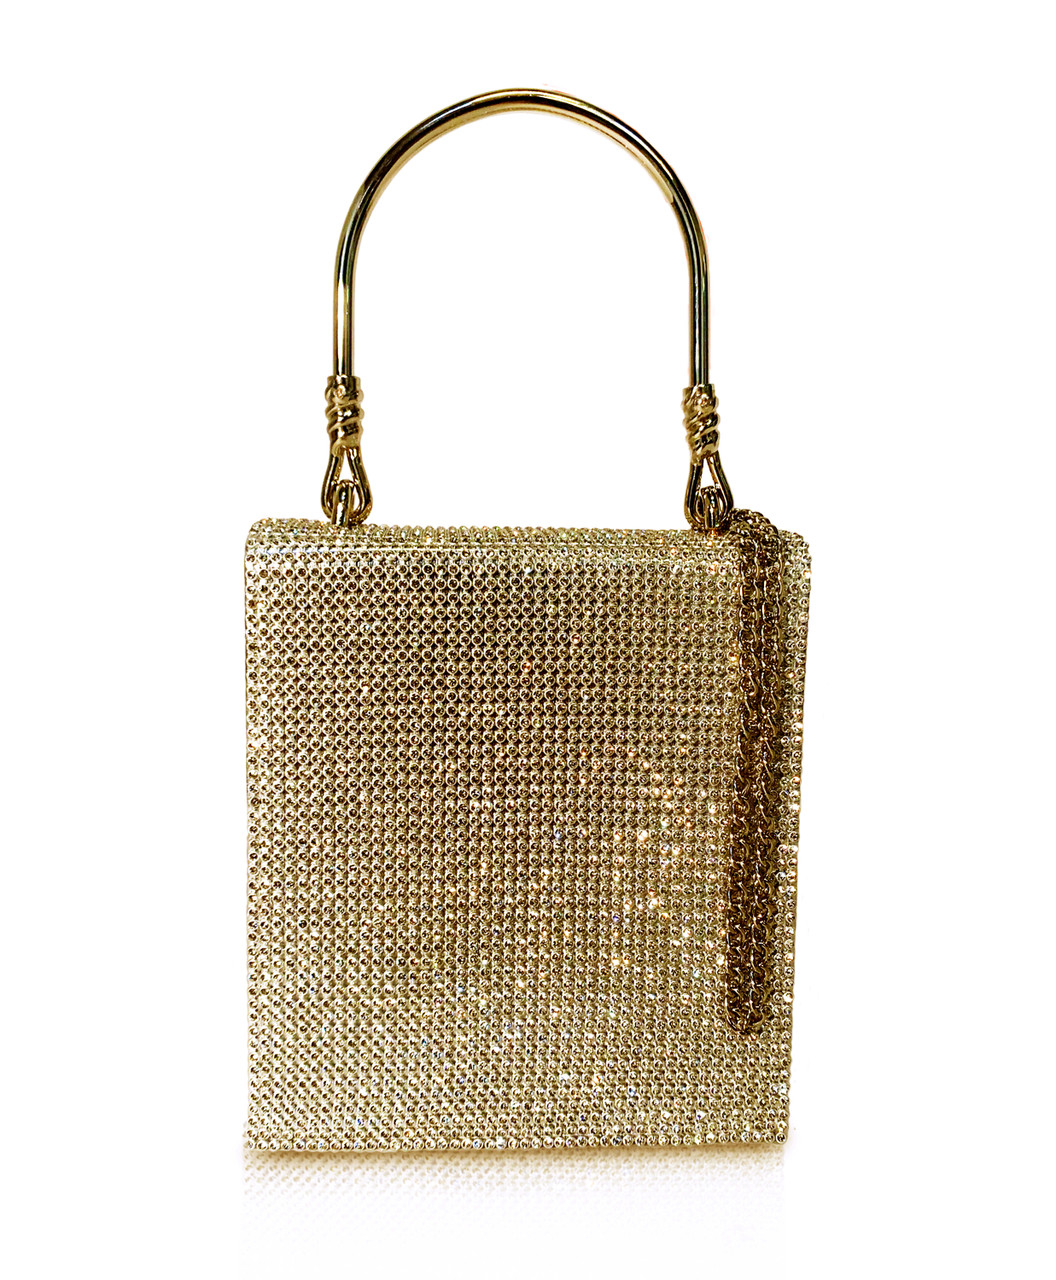  GLOD JORLEE Stylish Chain Satchel Handbags for Women